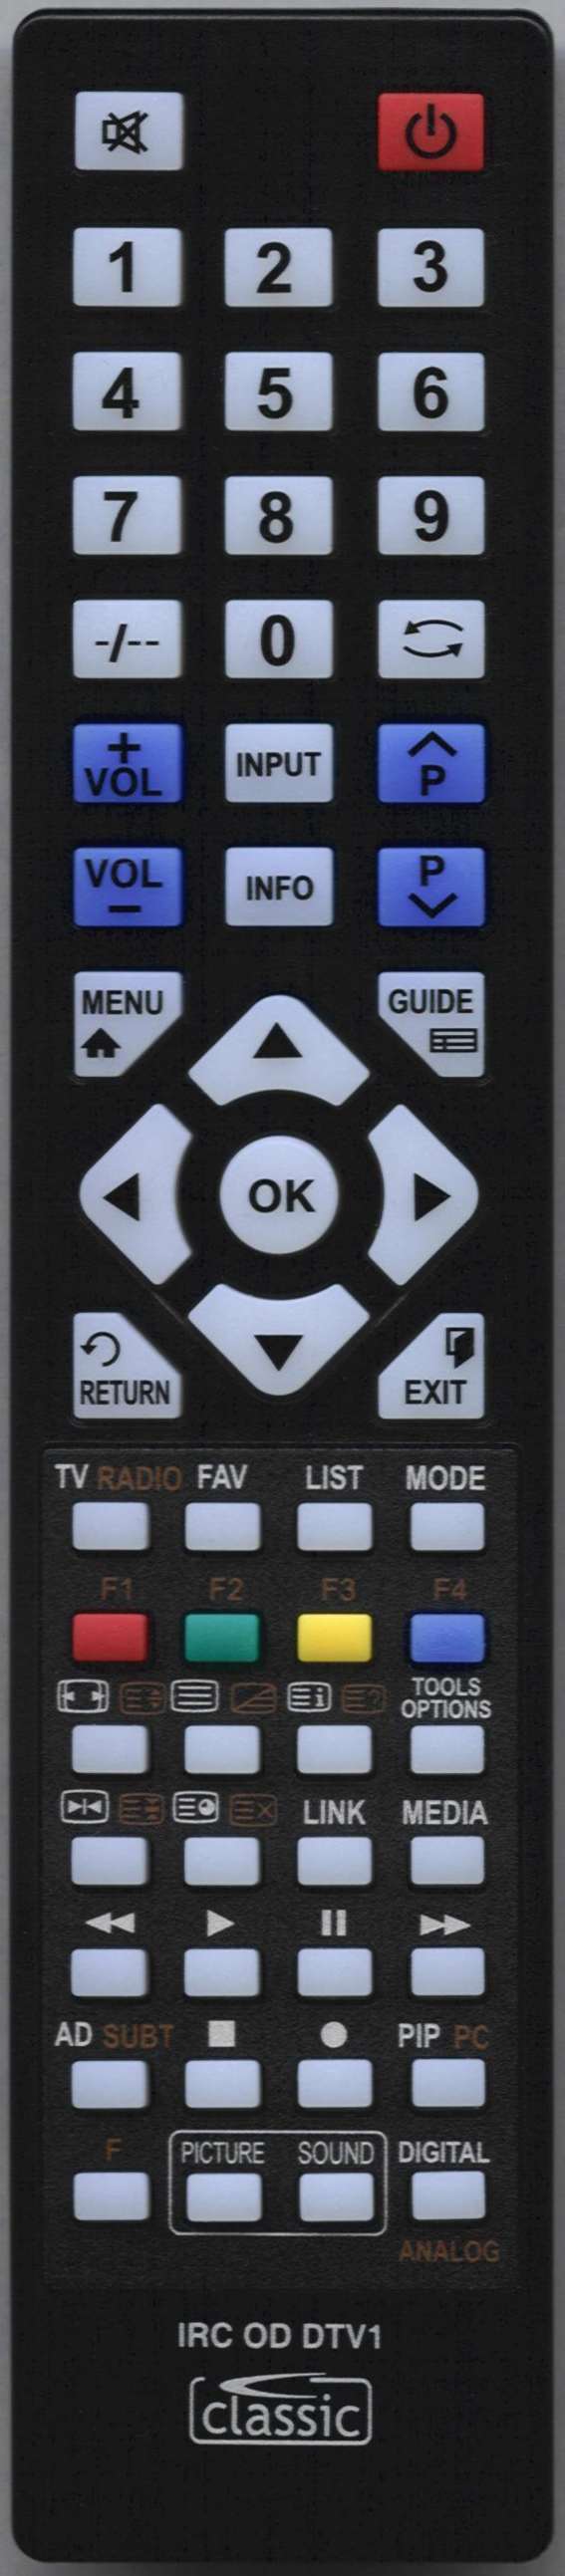 AKURA APL3268FD Remote Control